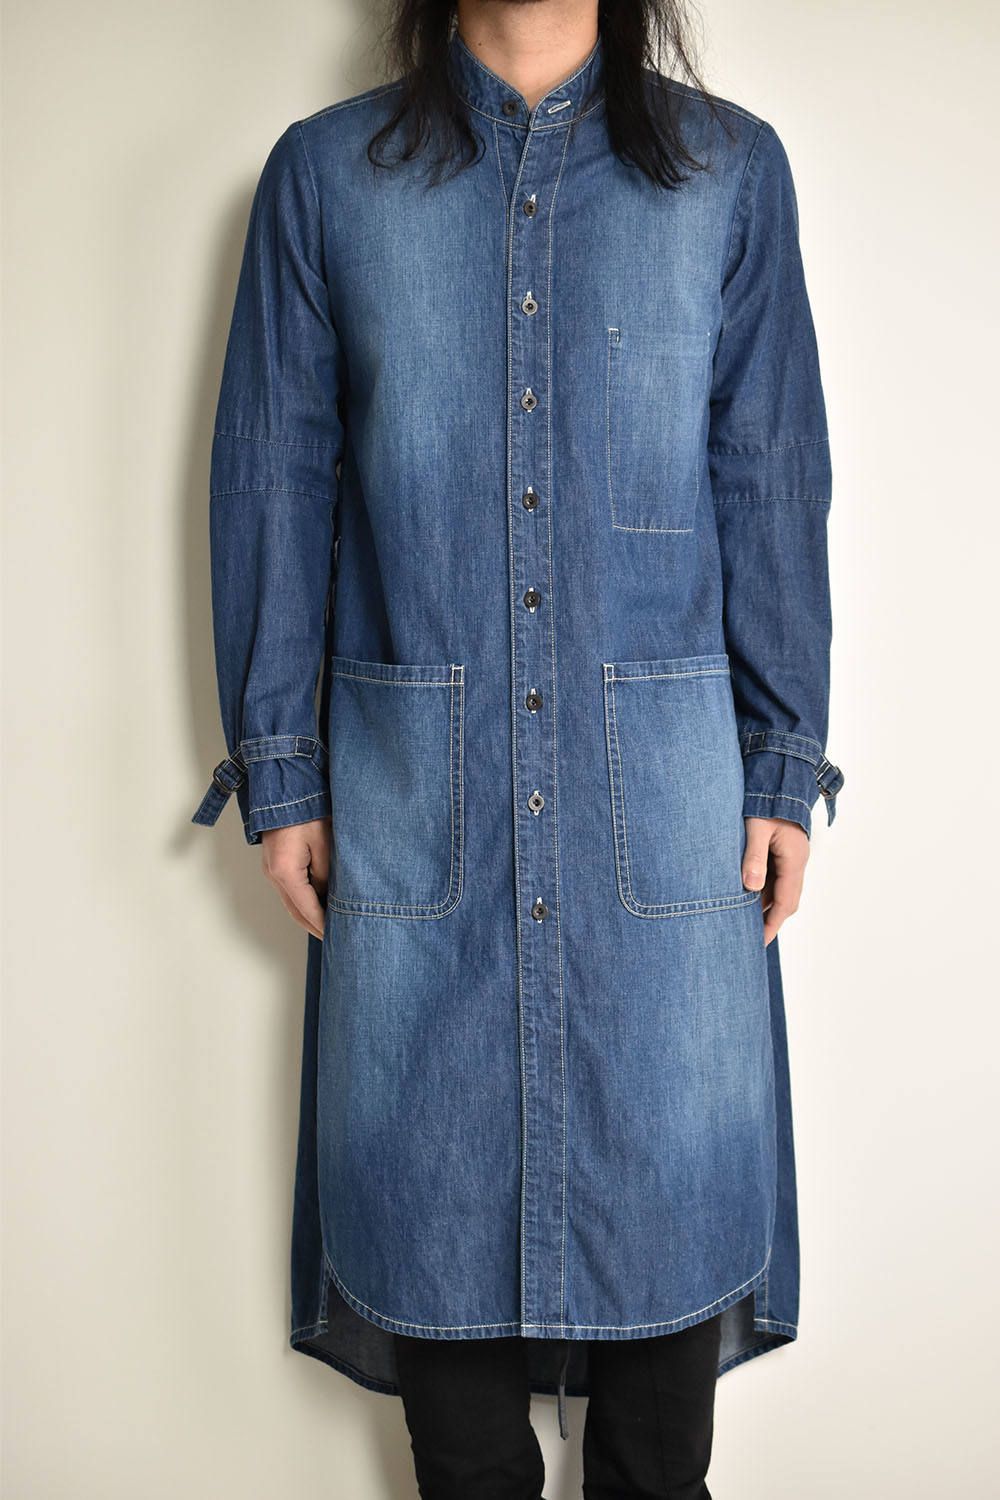 nude:masahiko maruyama - Denim Long Shirt  Jaket